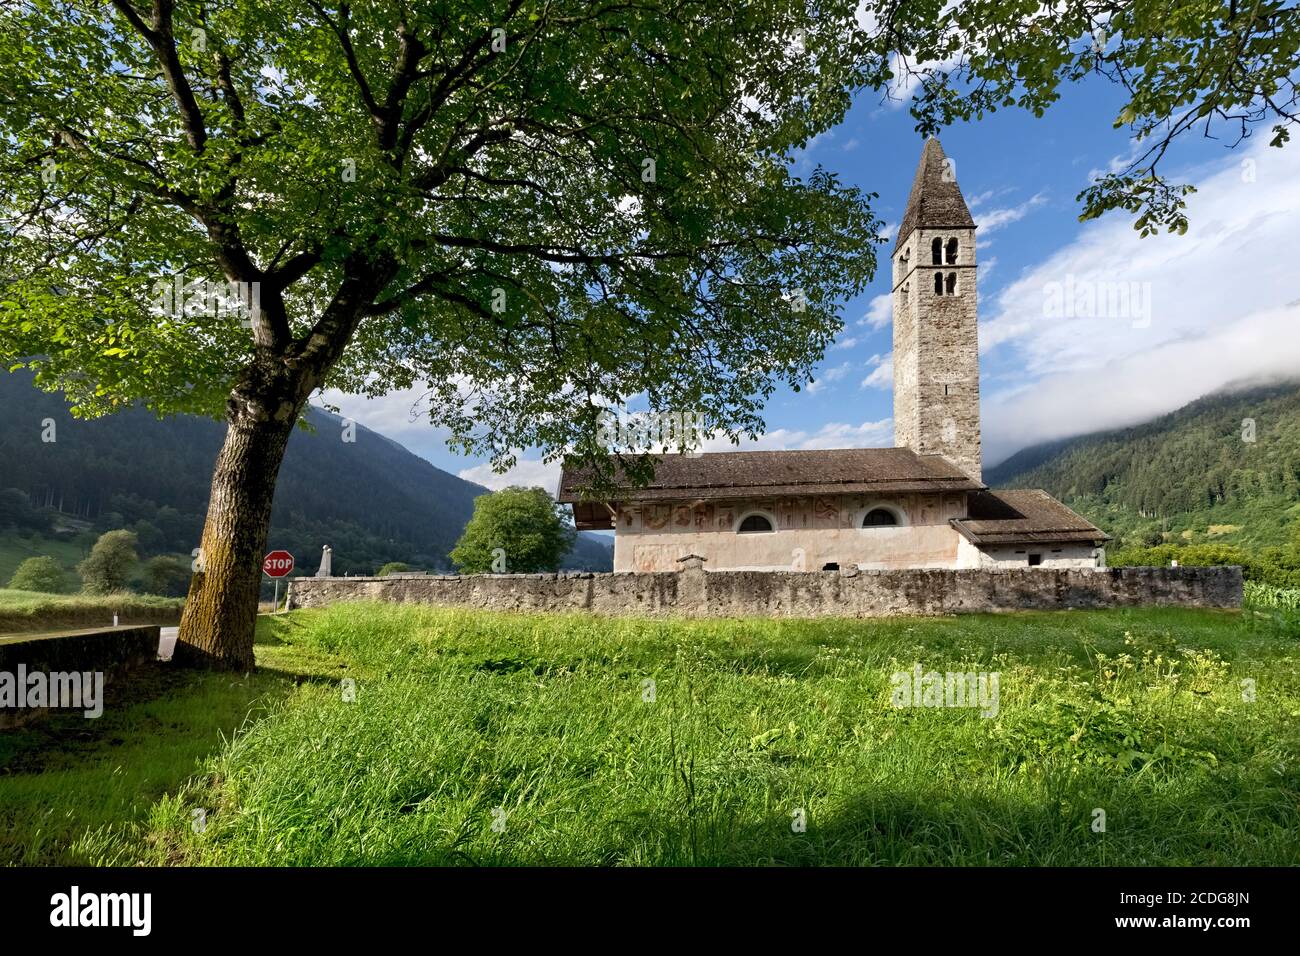 The church of Sant'Antonio Abate of Pelugo. Rendena Valley, Trento province, Trentino Alto-Adige, Italy, Europe. Stock Photo